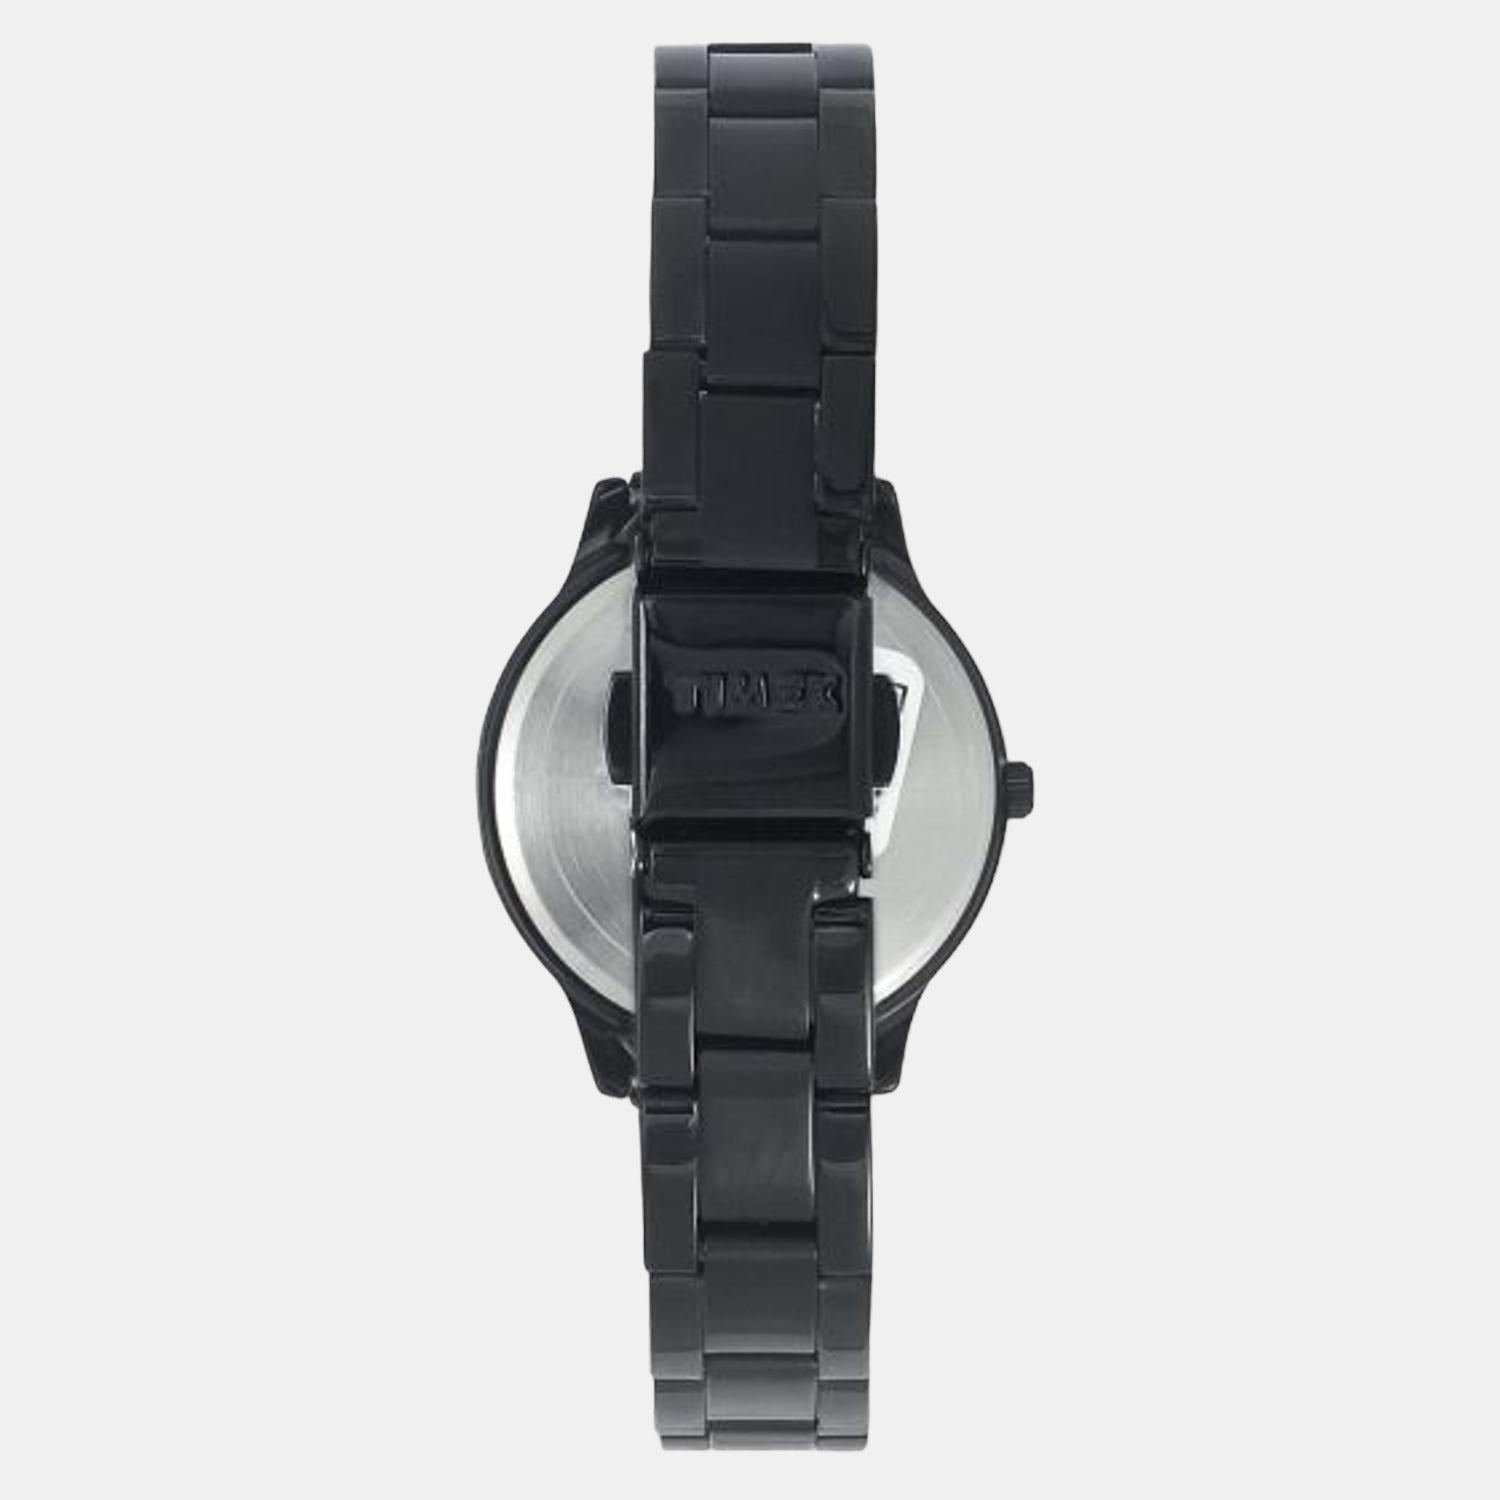 timex-alloys-black-analog-female-watch-tw000t633